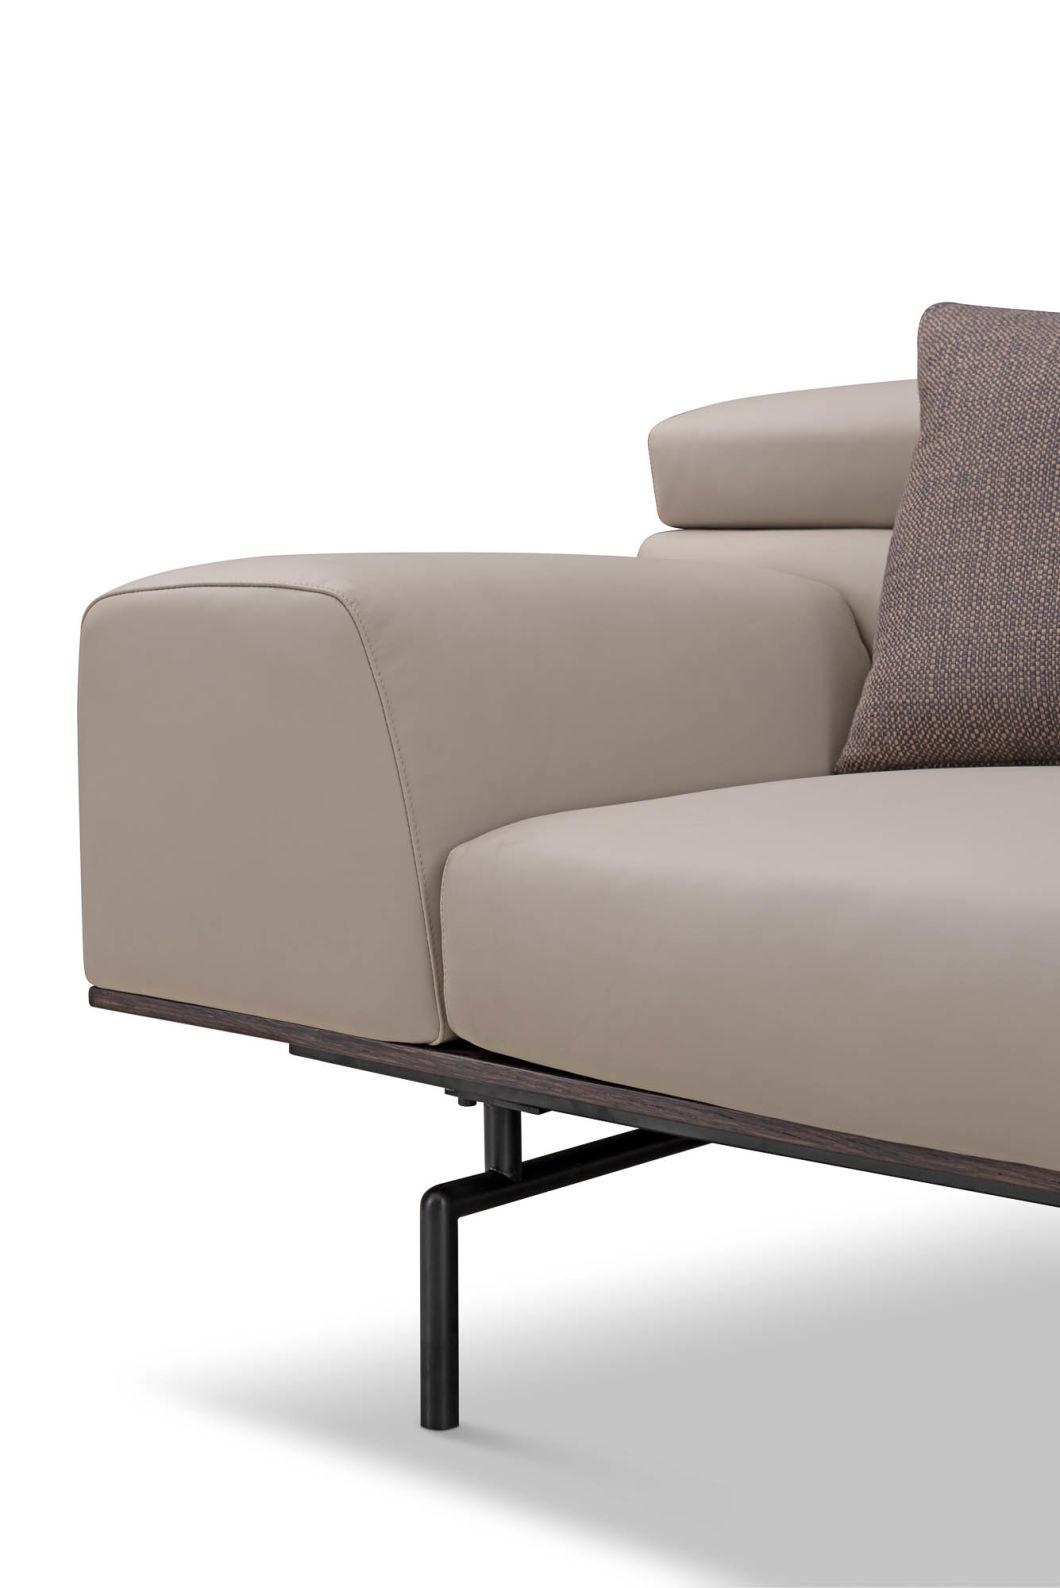 Attractive Design Living Room Furniture Luxury Classic 2 Seater Genuine Leather Sofas